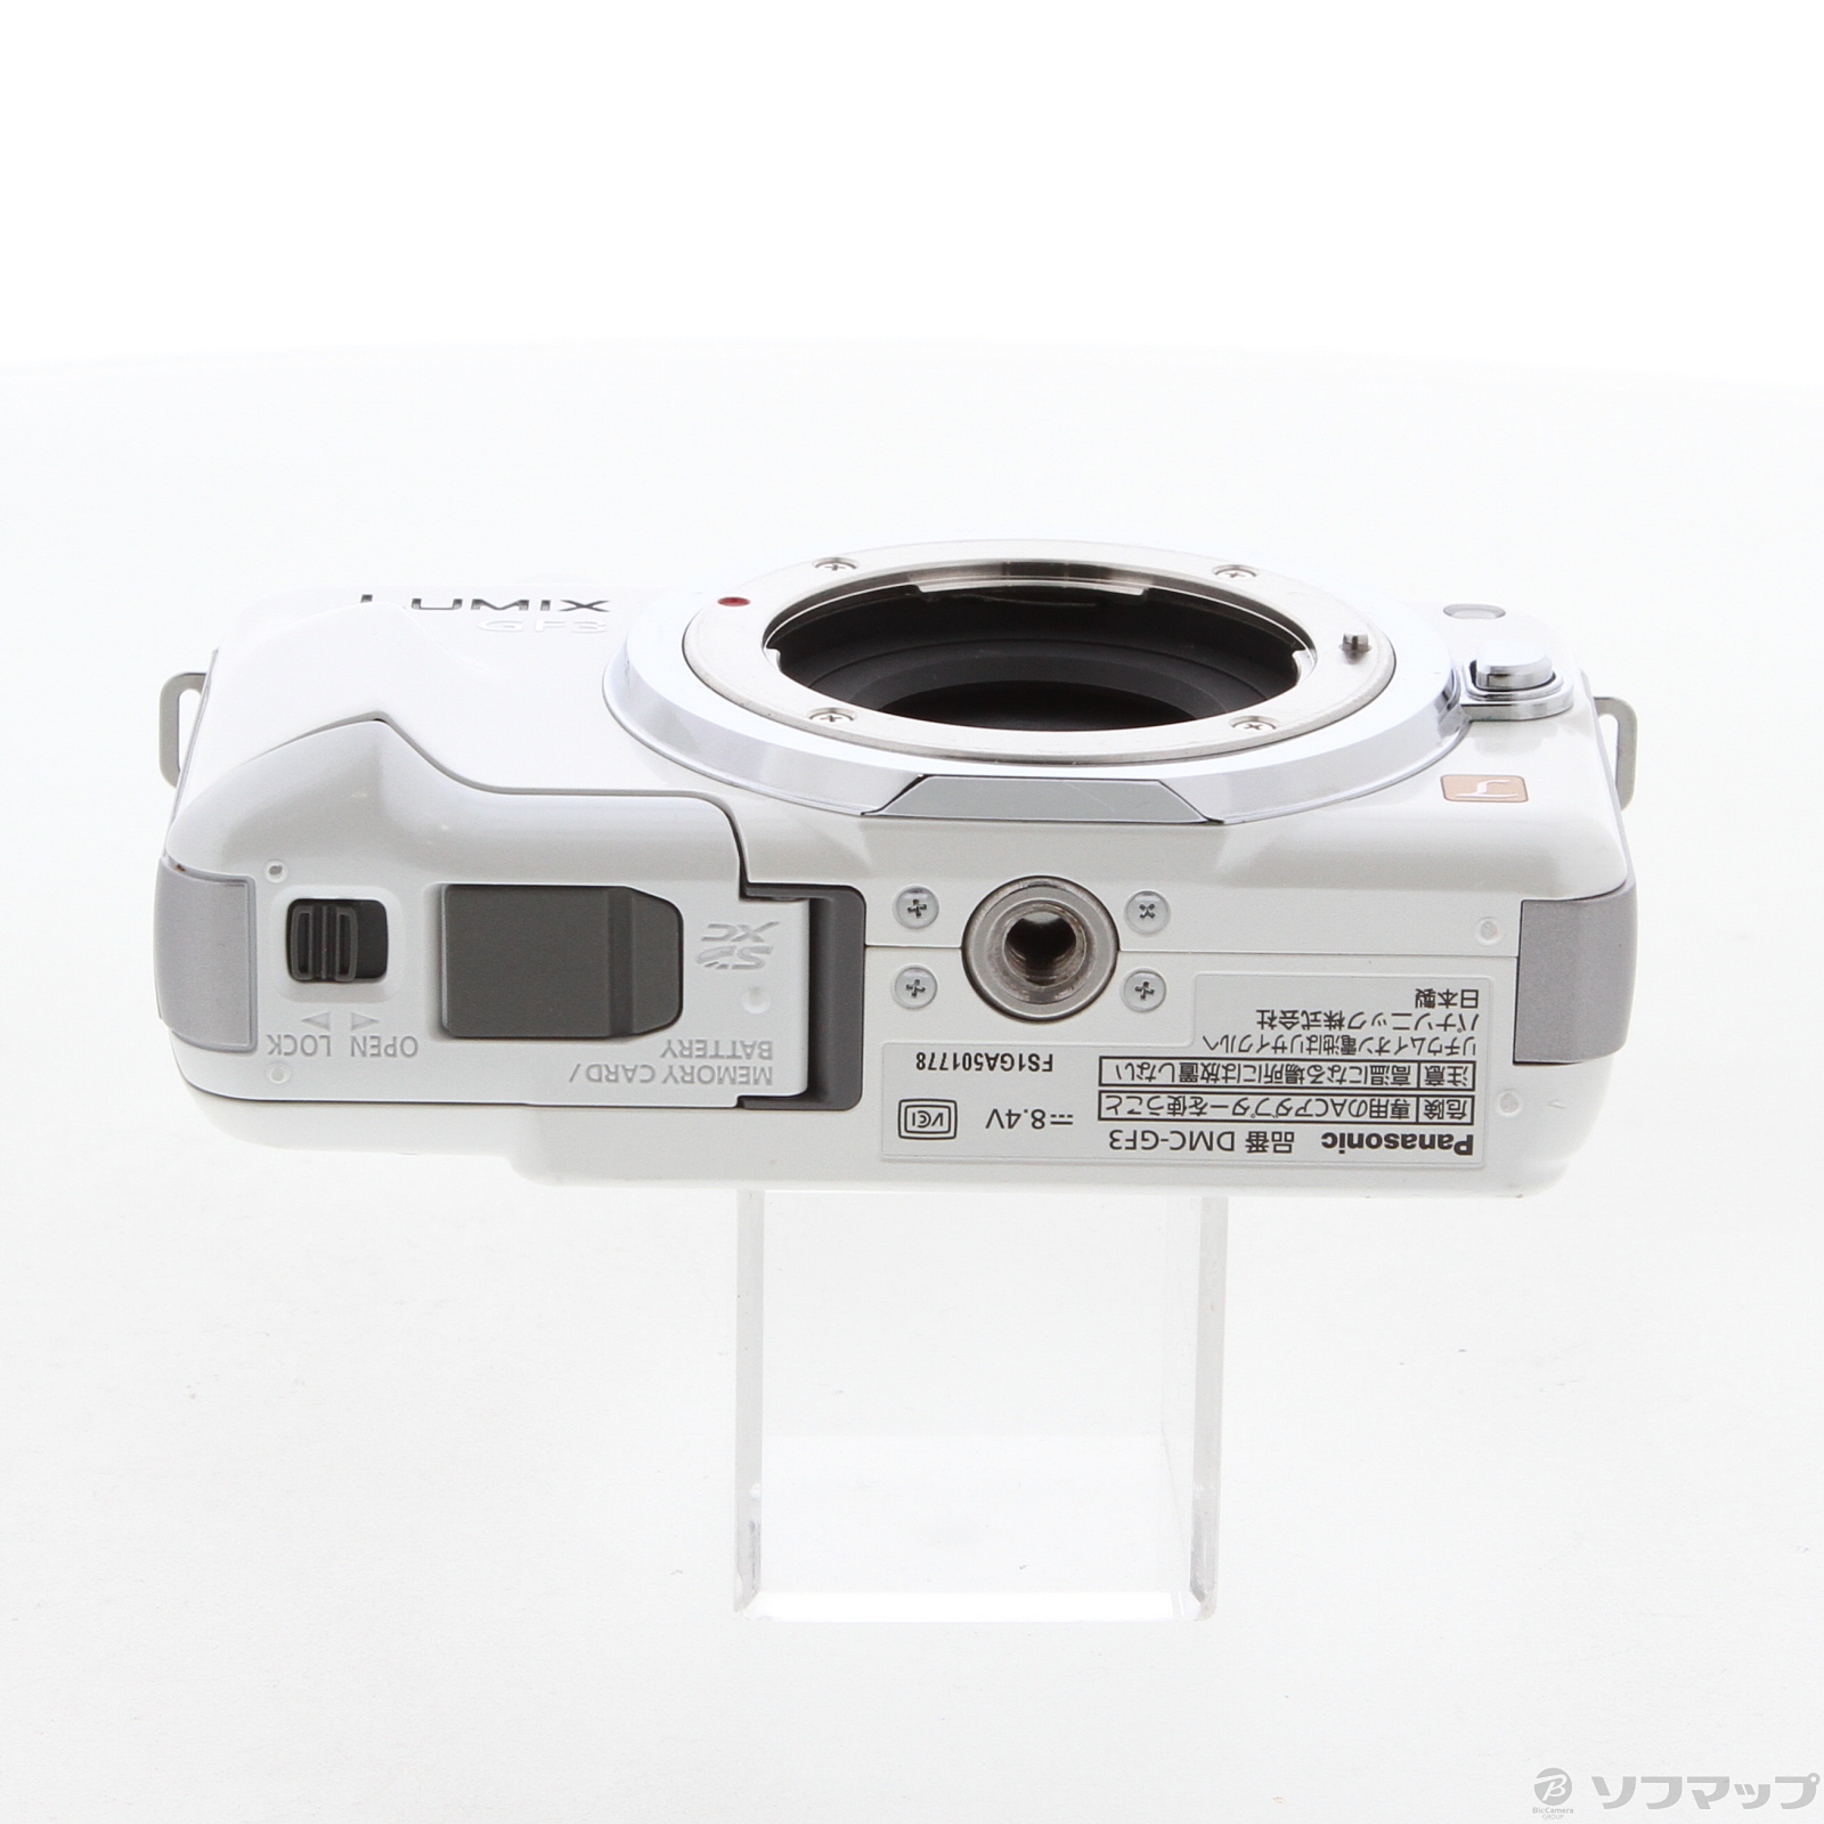 Panasonicルミックス ミラーレスカメラ シェルホワイトDMC-GF3-W